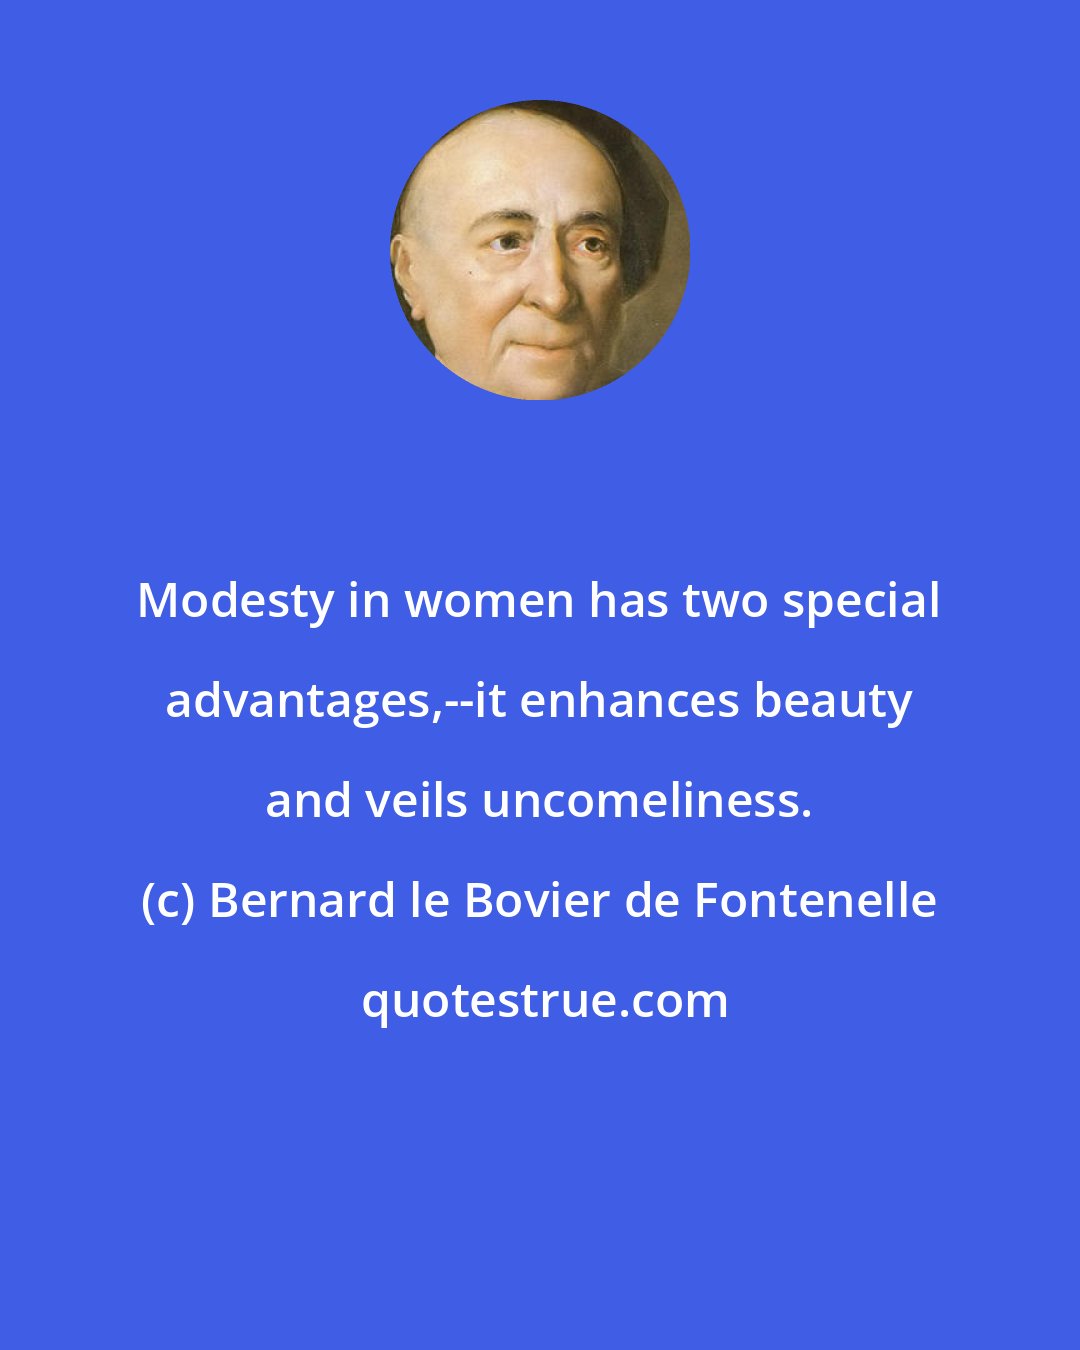 Bernard le Bovier de Fontenelle: Modesty in women has two special advantages,--it enhances beauty and veils uncomeliness.